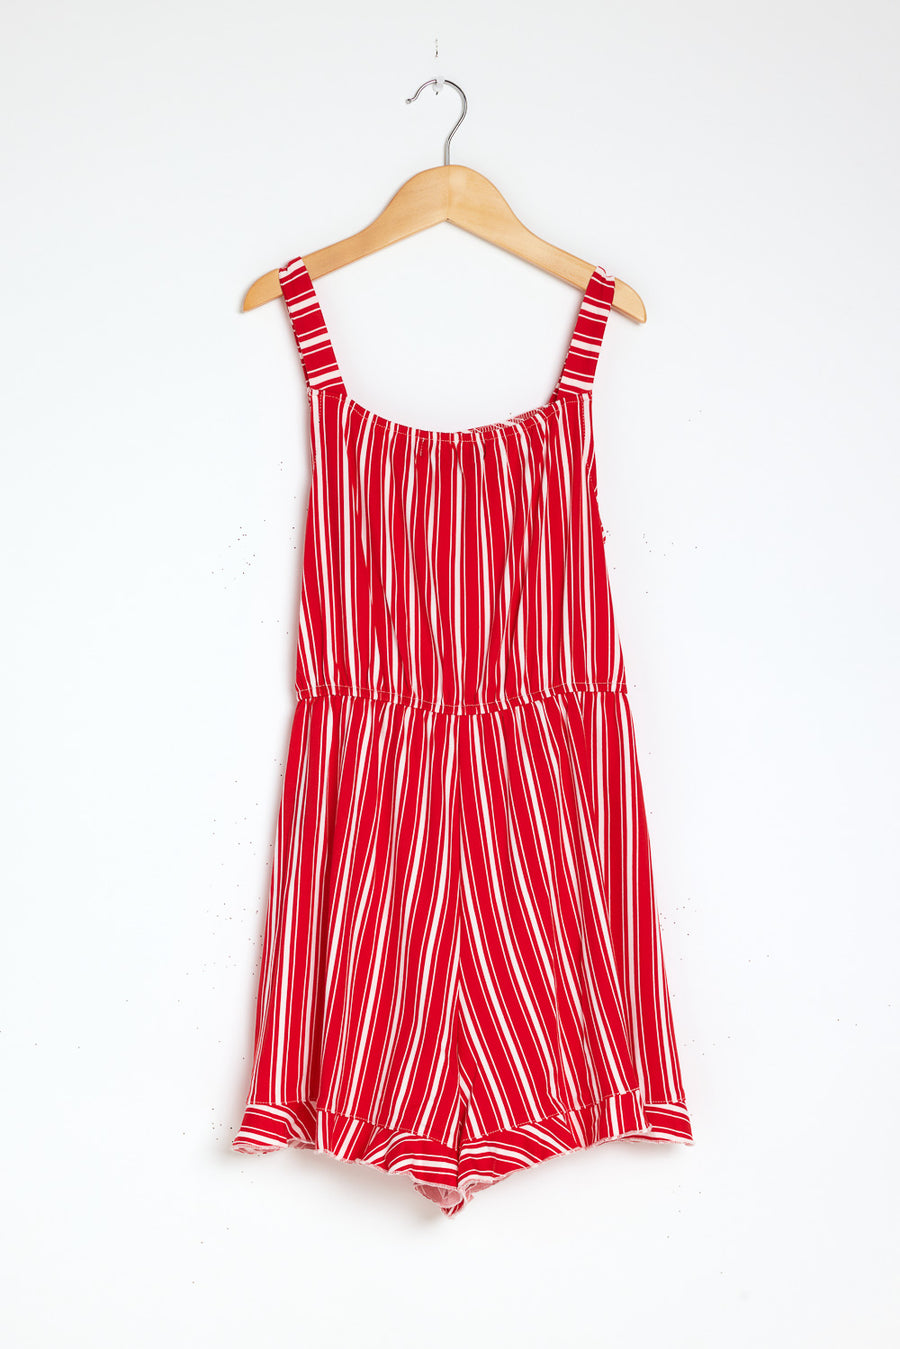 Kids Red White Stripe Knit Romper - Trixxi Clothing